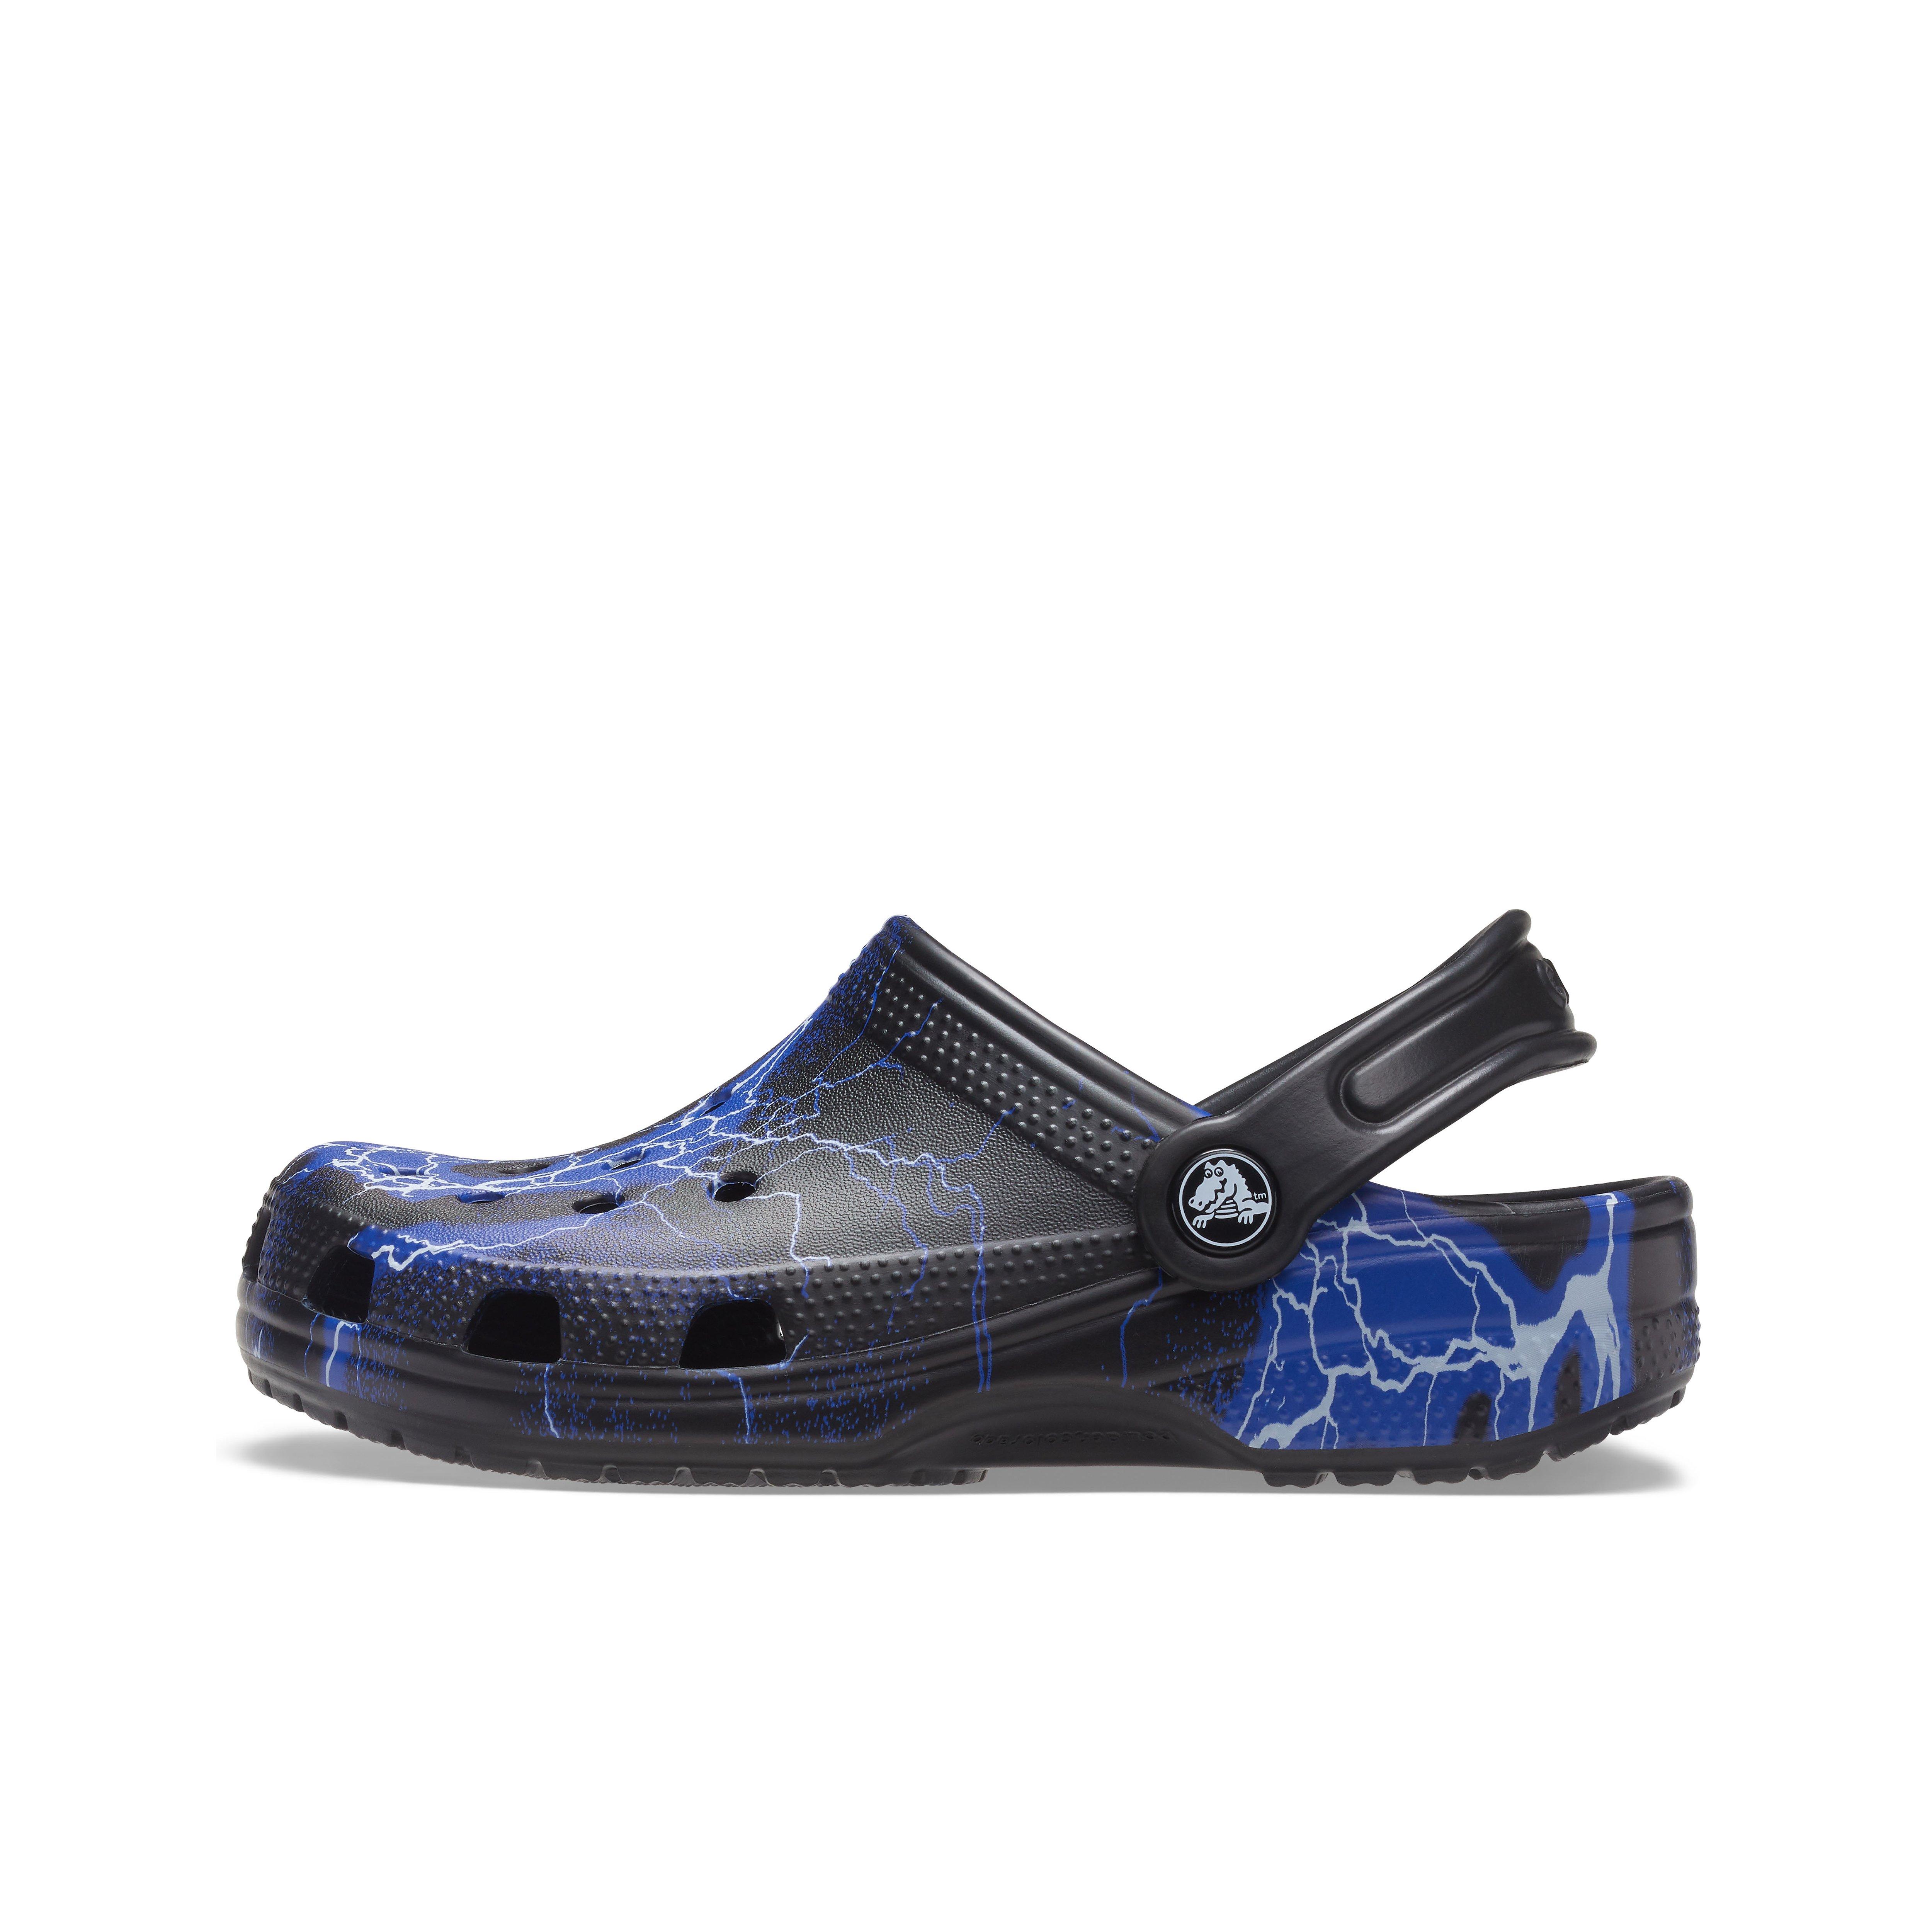 black and blue lightning crocs